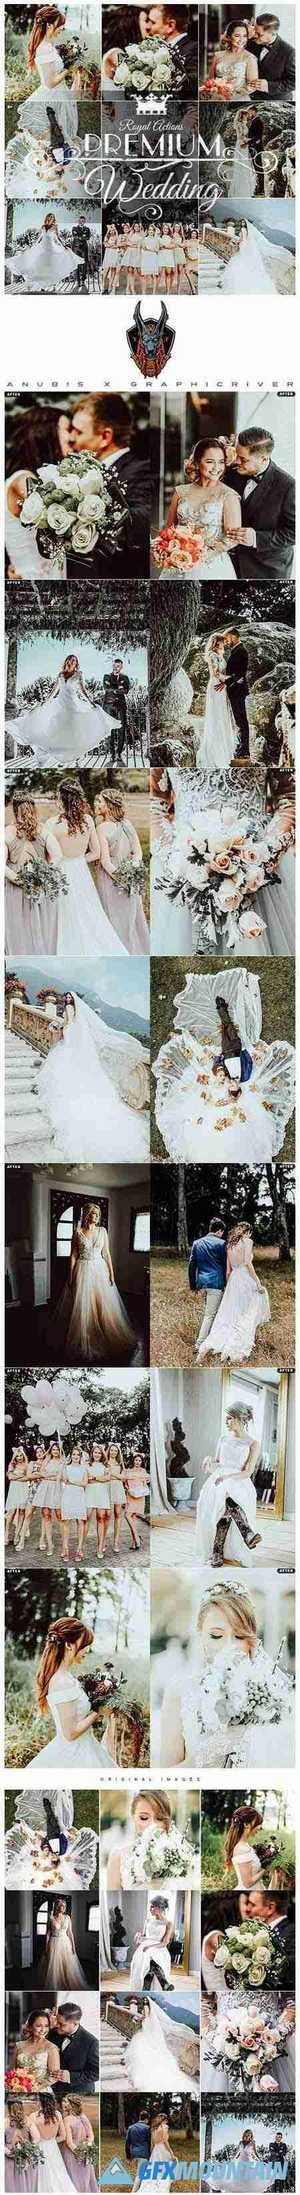 Royal Wedding Photoshop Actions 26378694